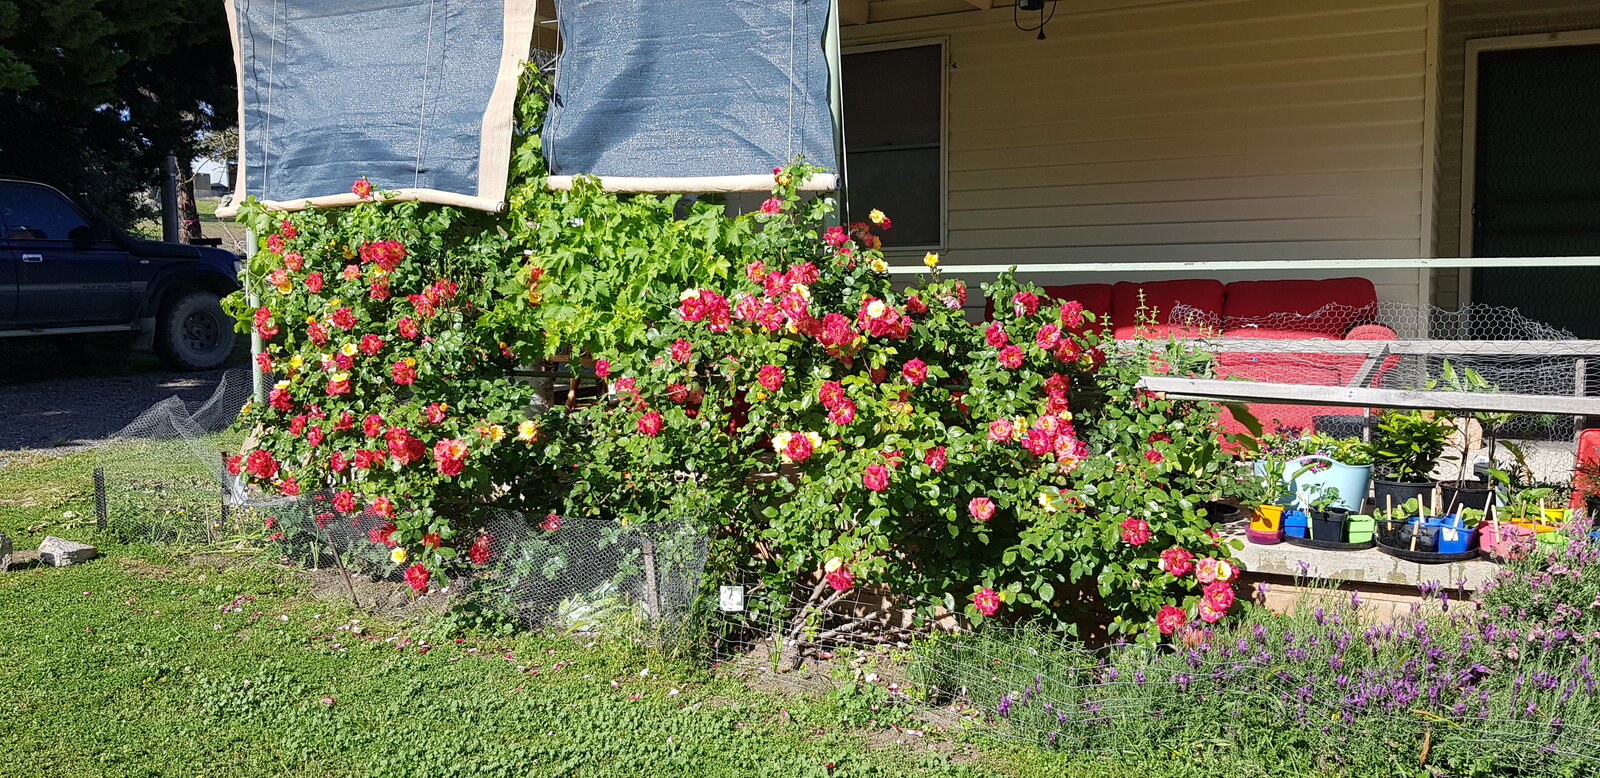 Camelia roses on the veranda (and the grape vine)